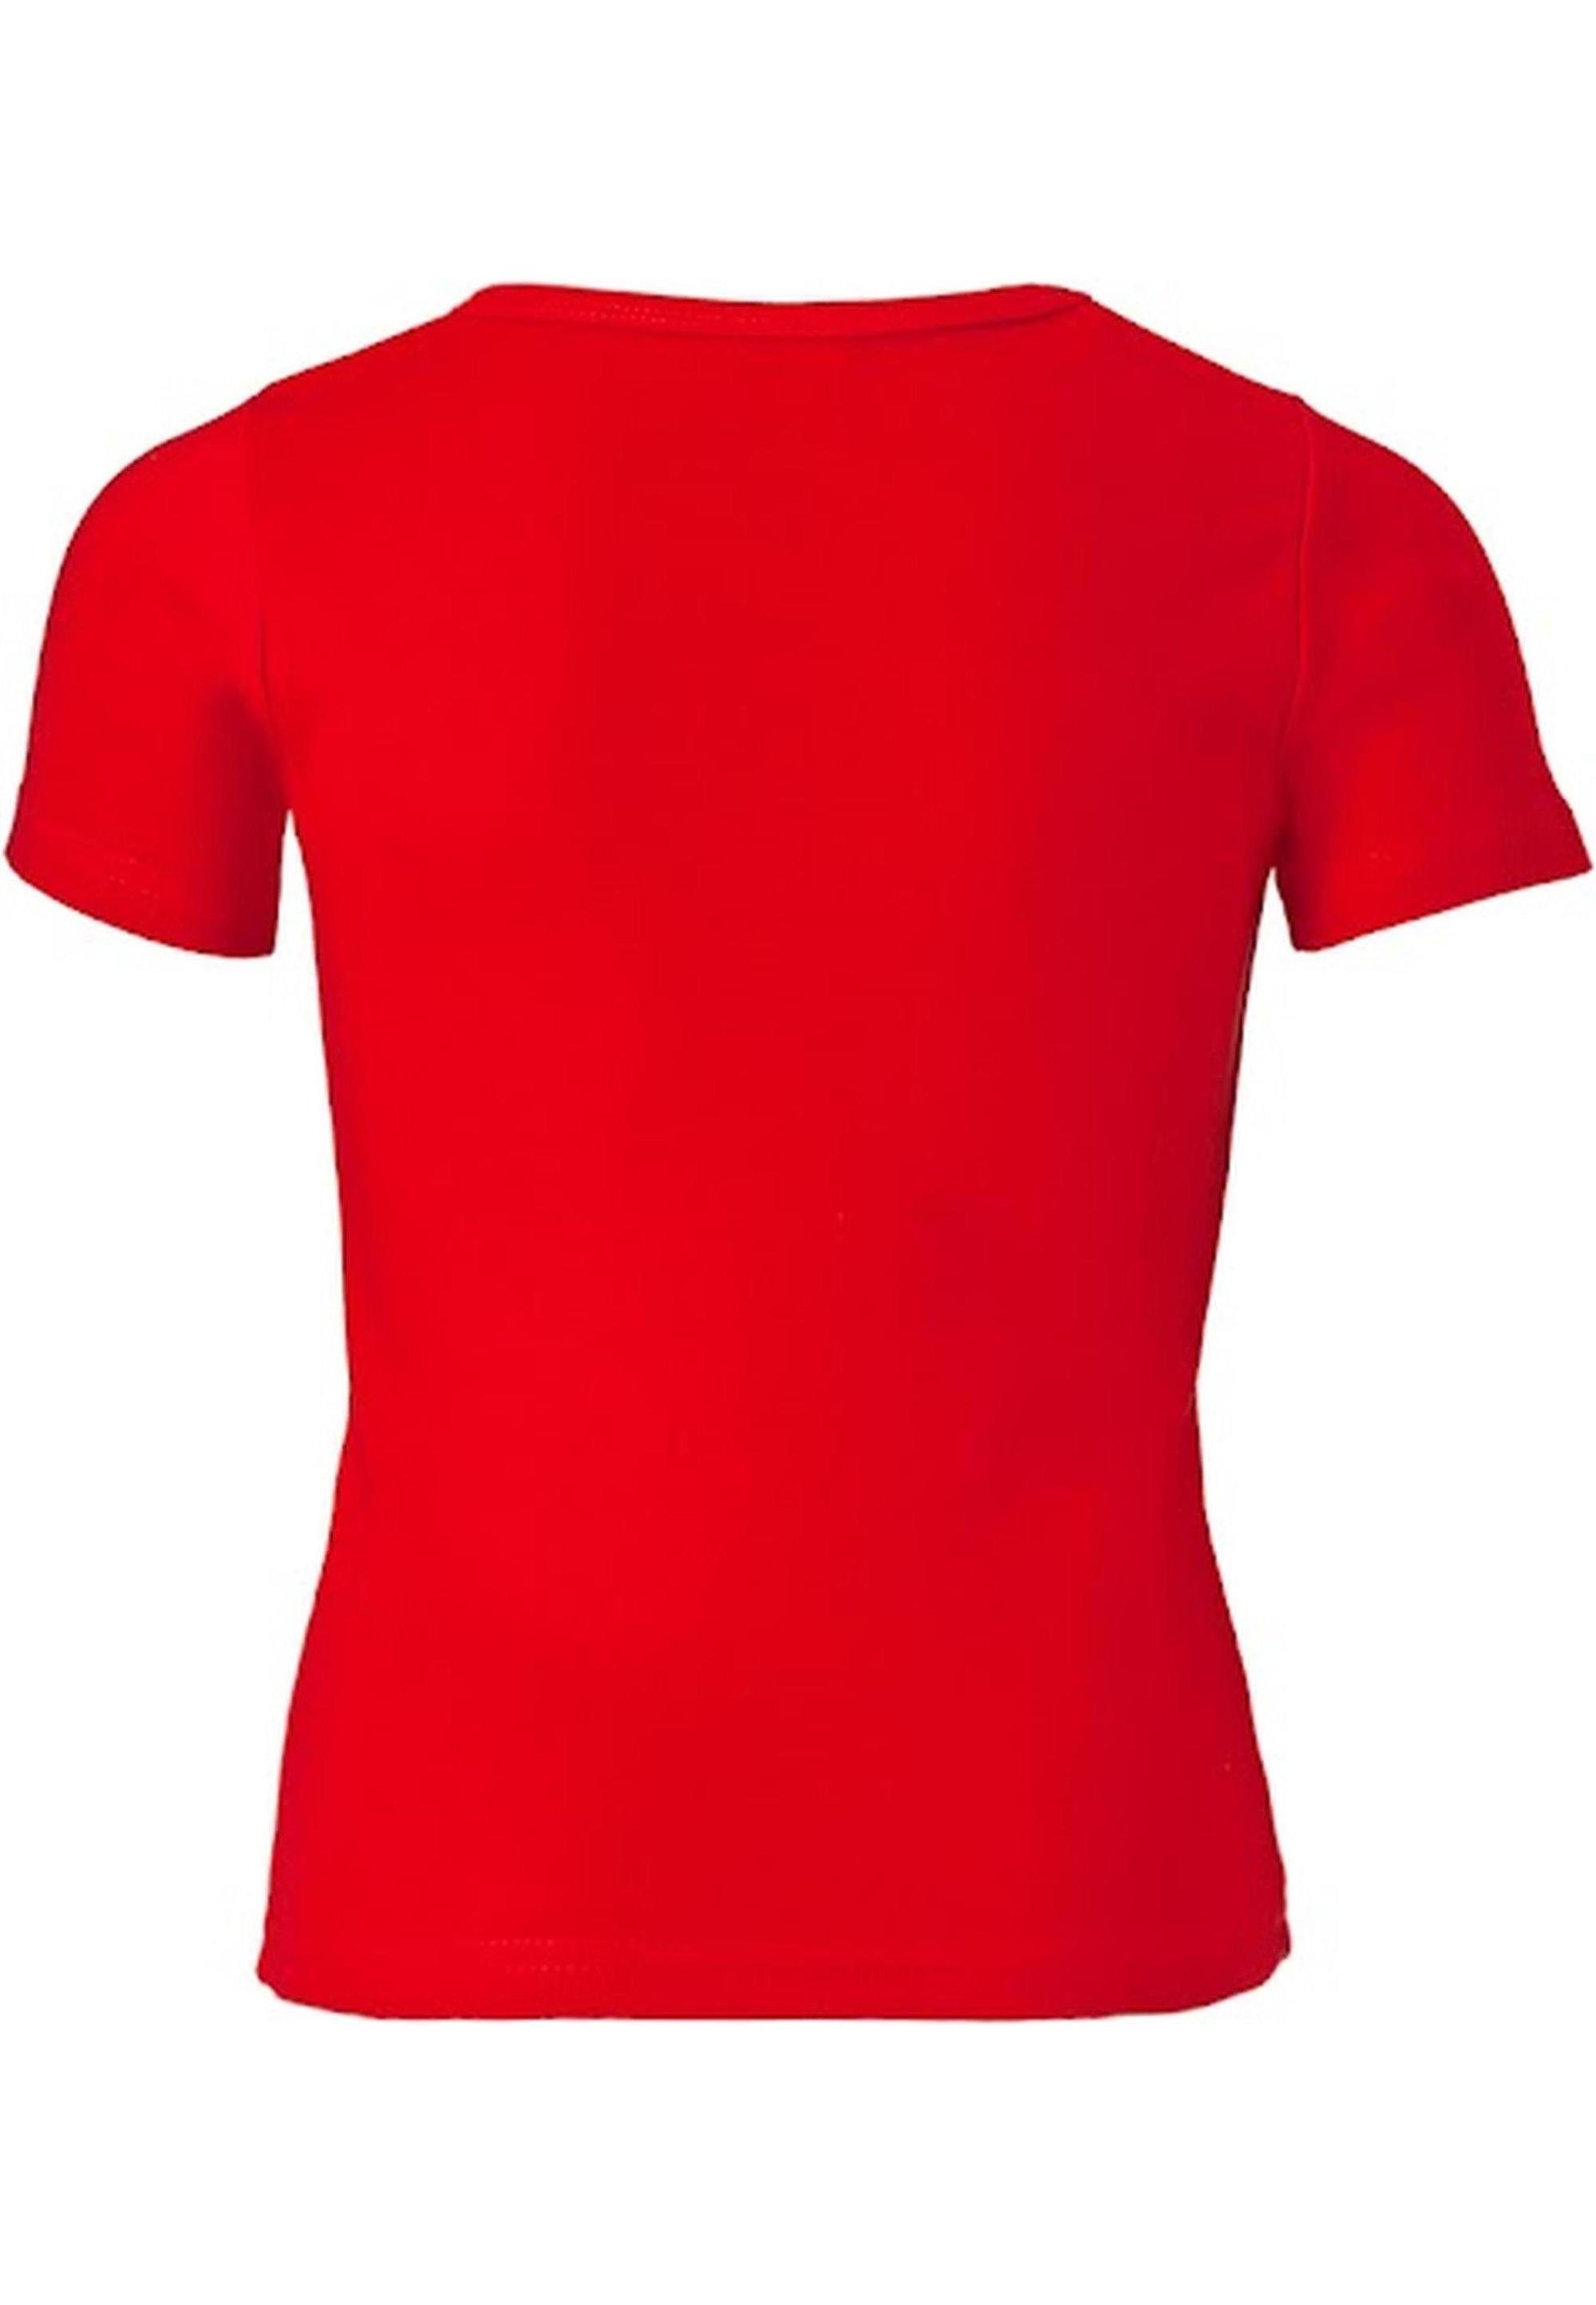 rot lizenziertem Maus Die T-Shirt LOGOSHIRT mit Originaldesign